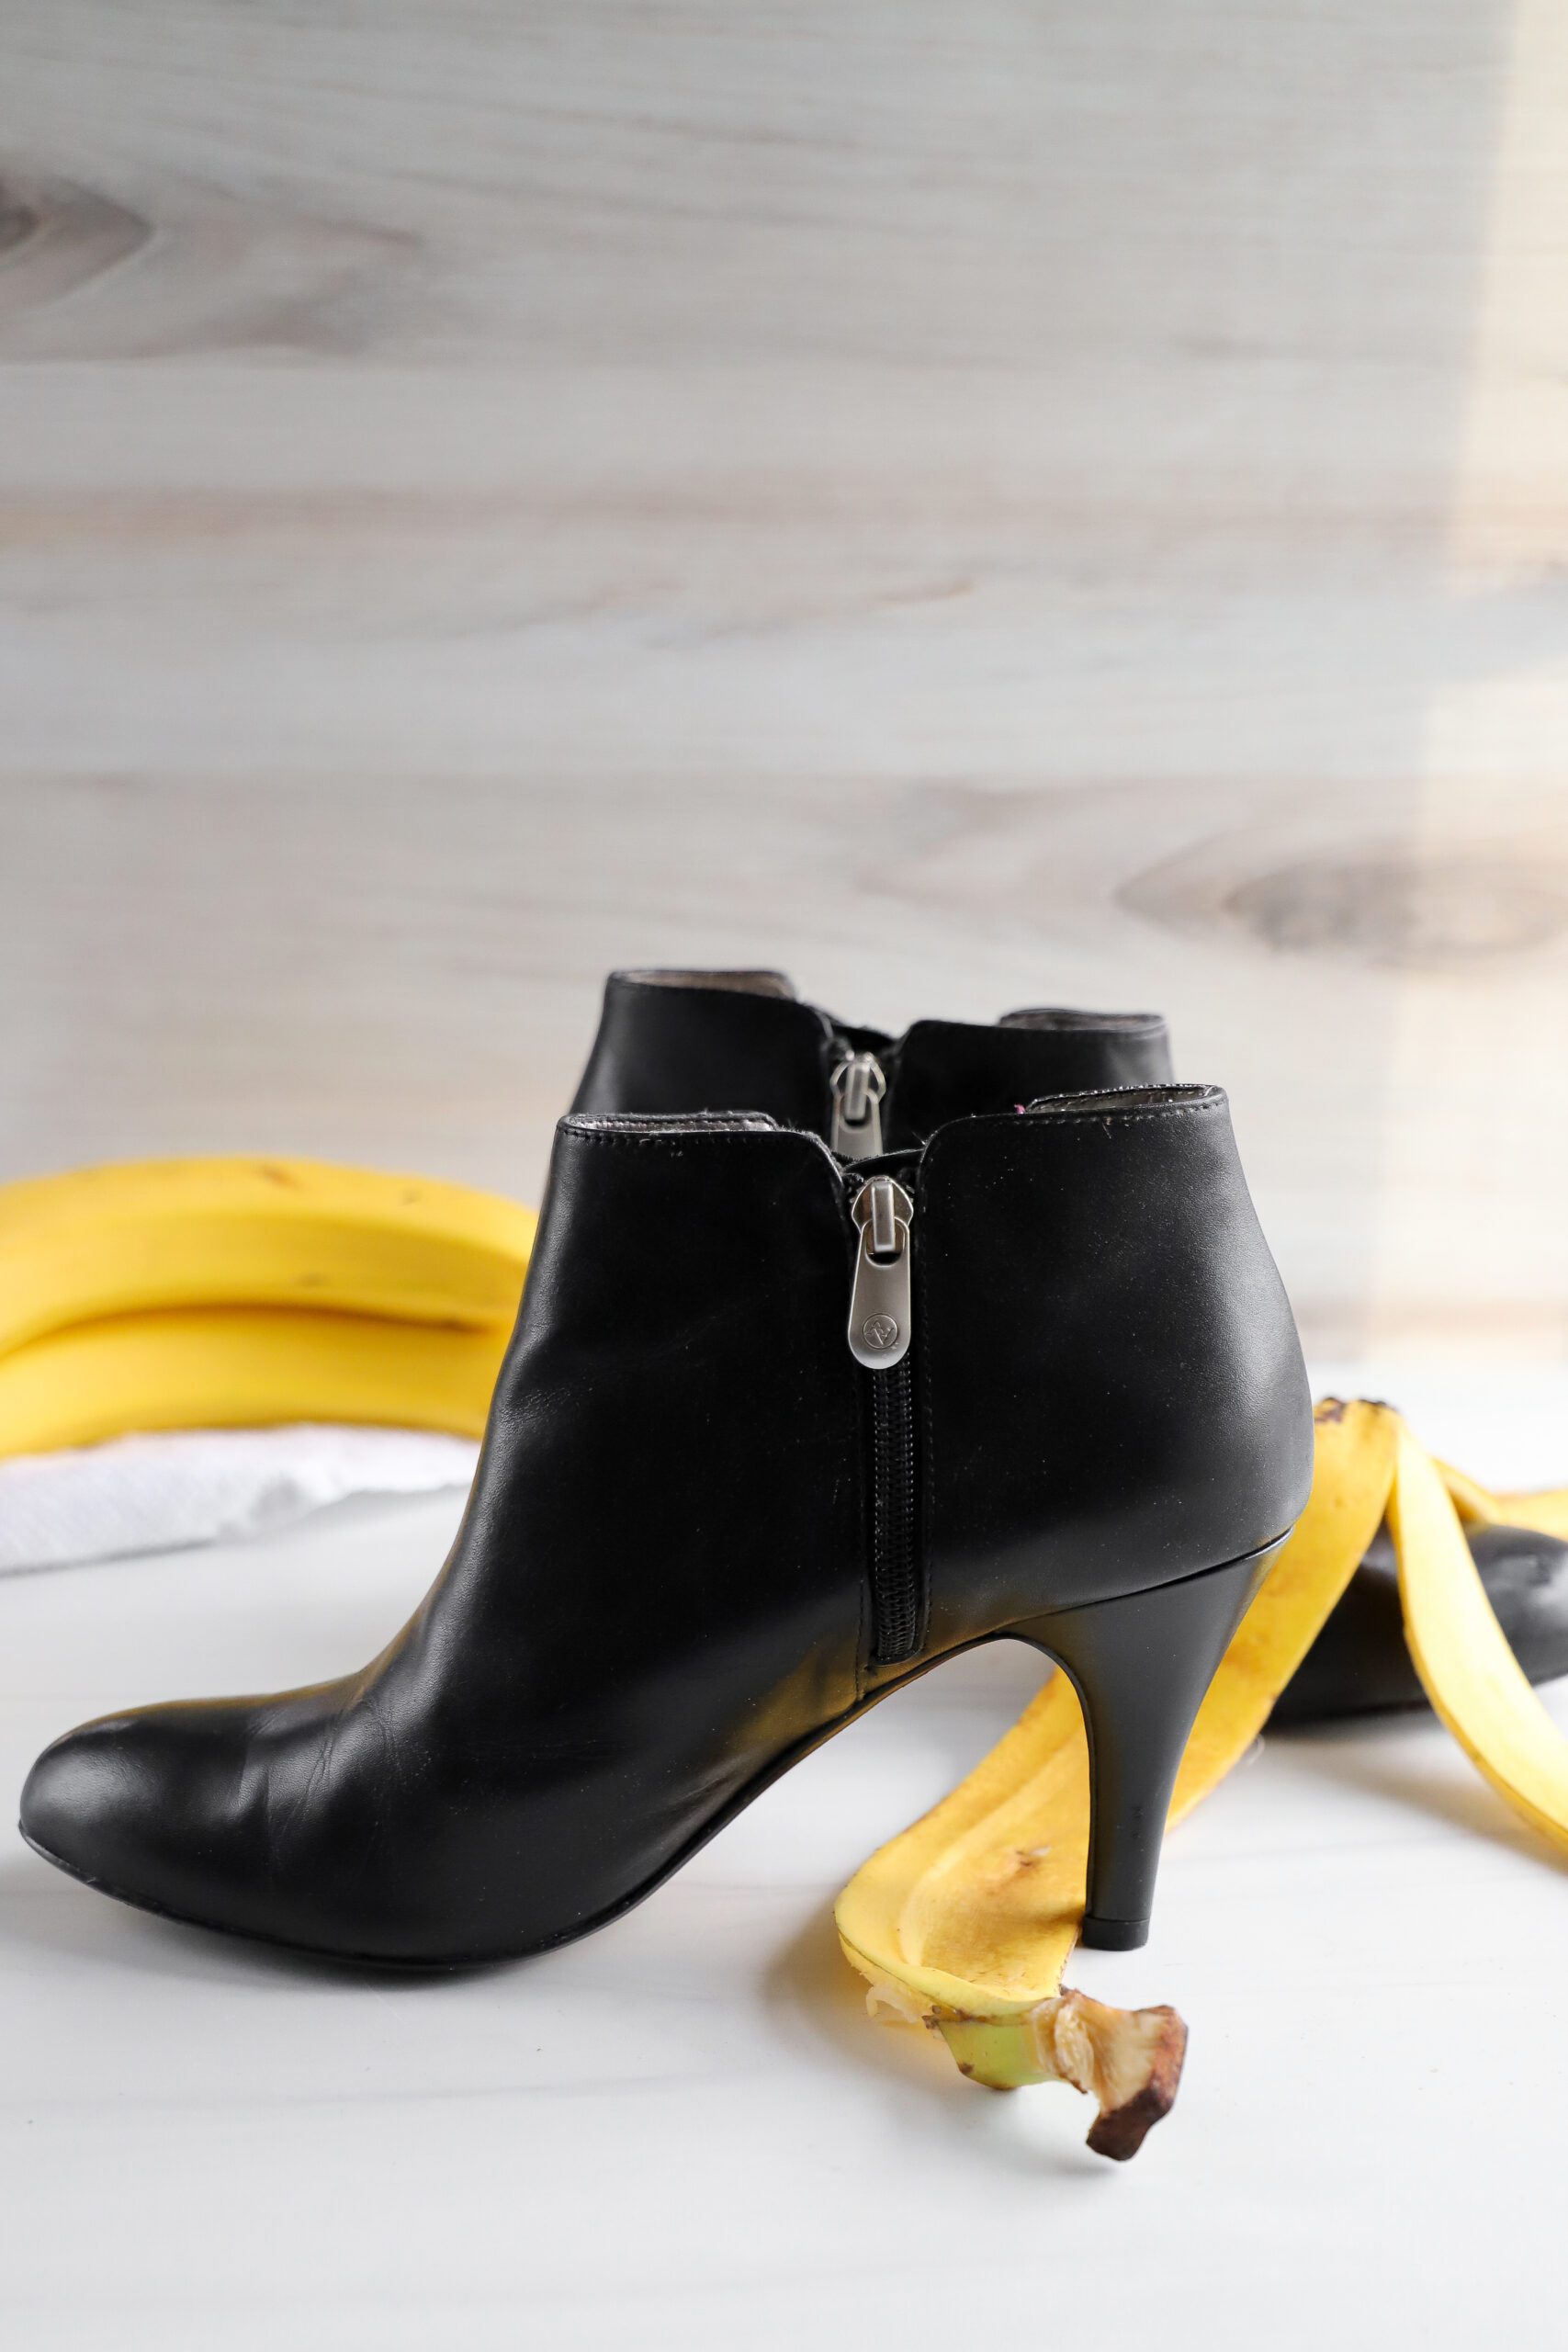 Banana Shoe Shine: How To Shine Your Shoes With A Banana Peel